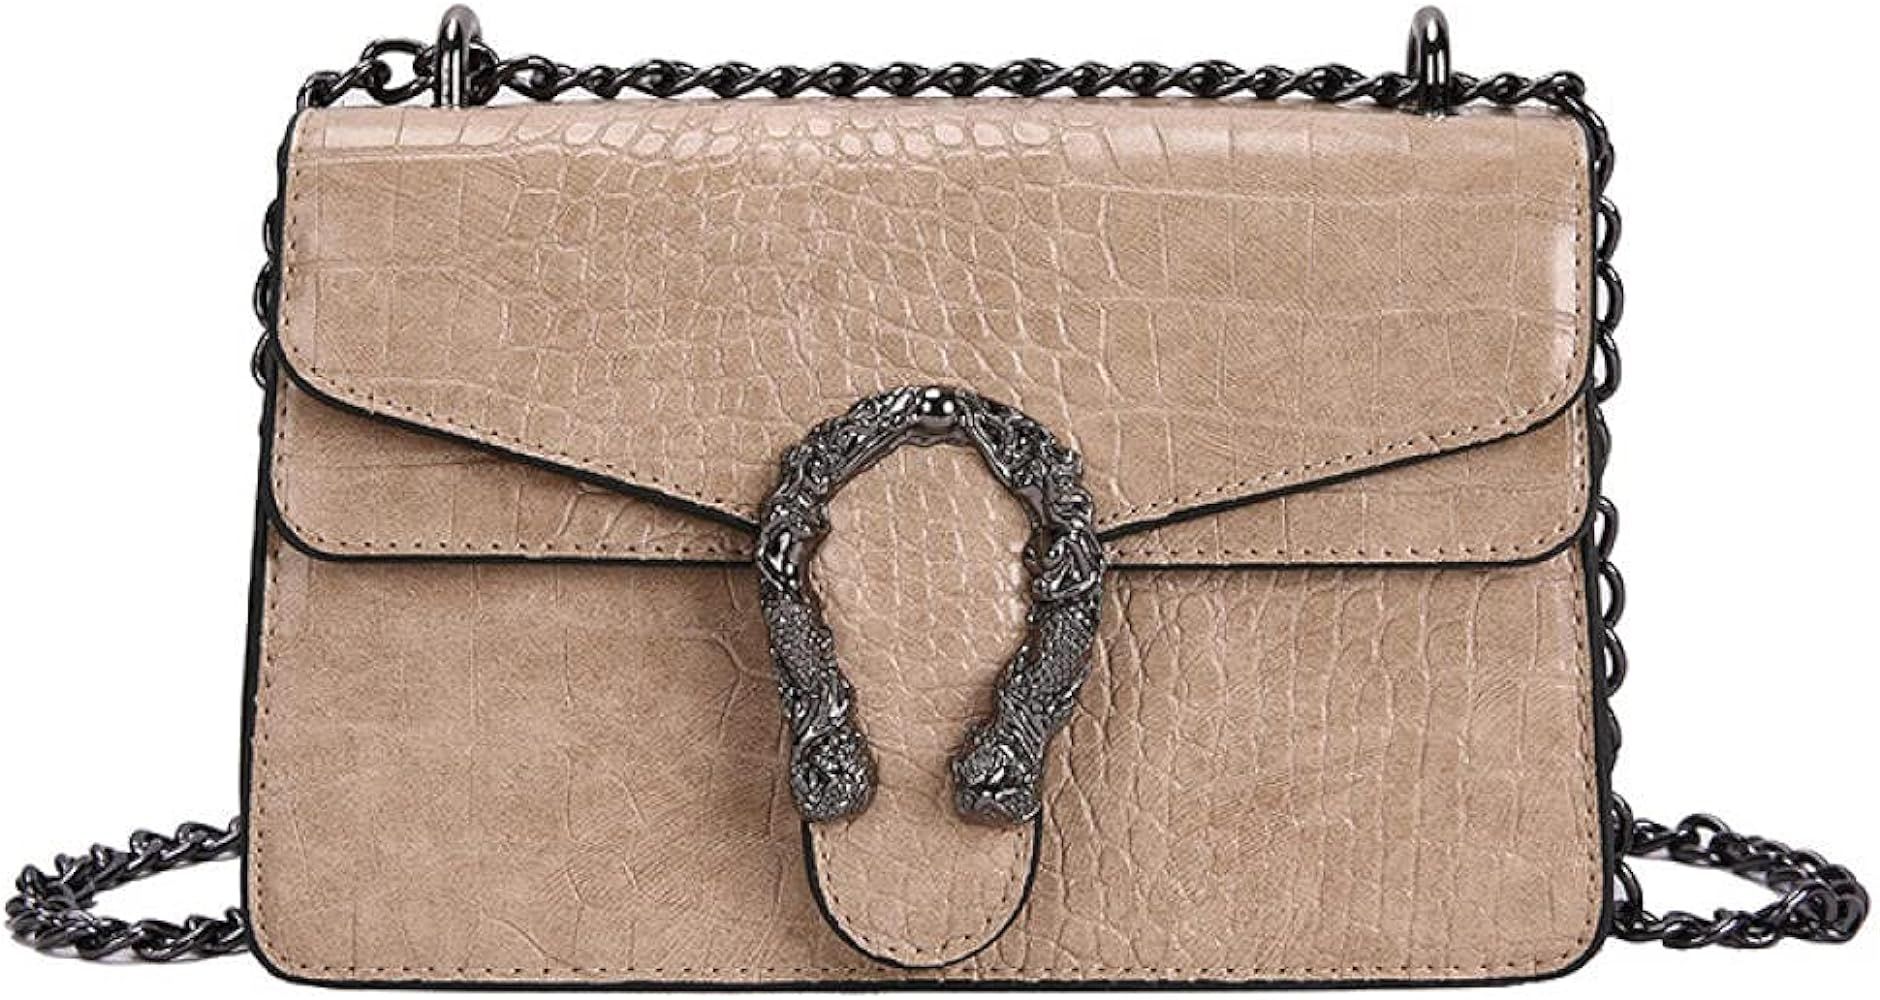 Famous Brand Bags Women Shoulder Bag PU Leather Ladies Handbag Luxury Designer Bag Messenger Crossbo | Amazon (US)